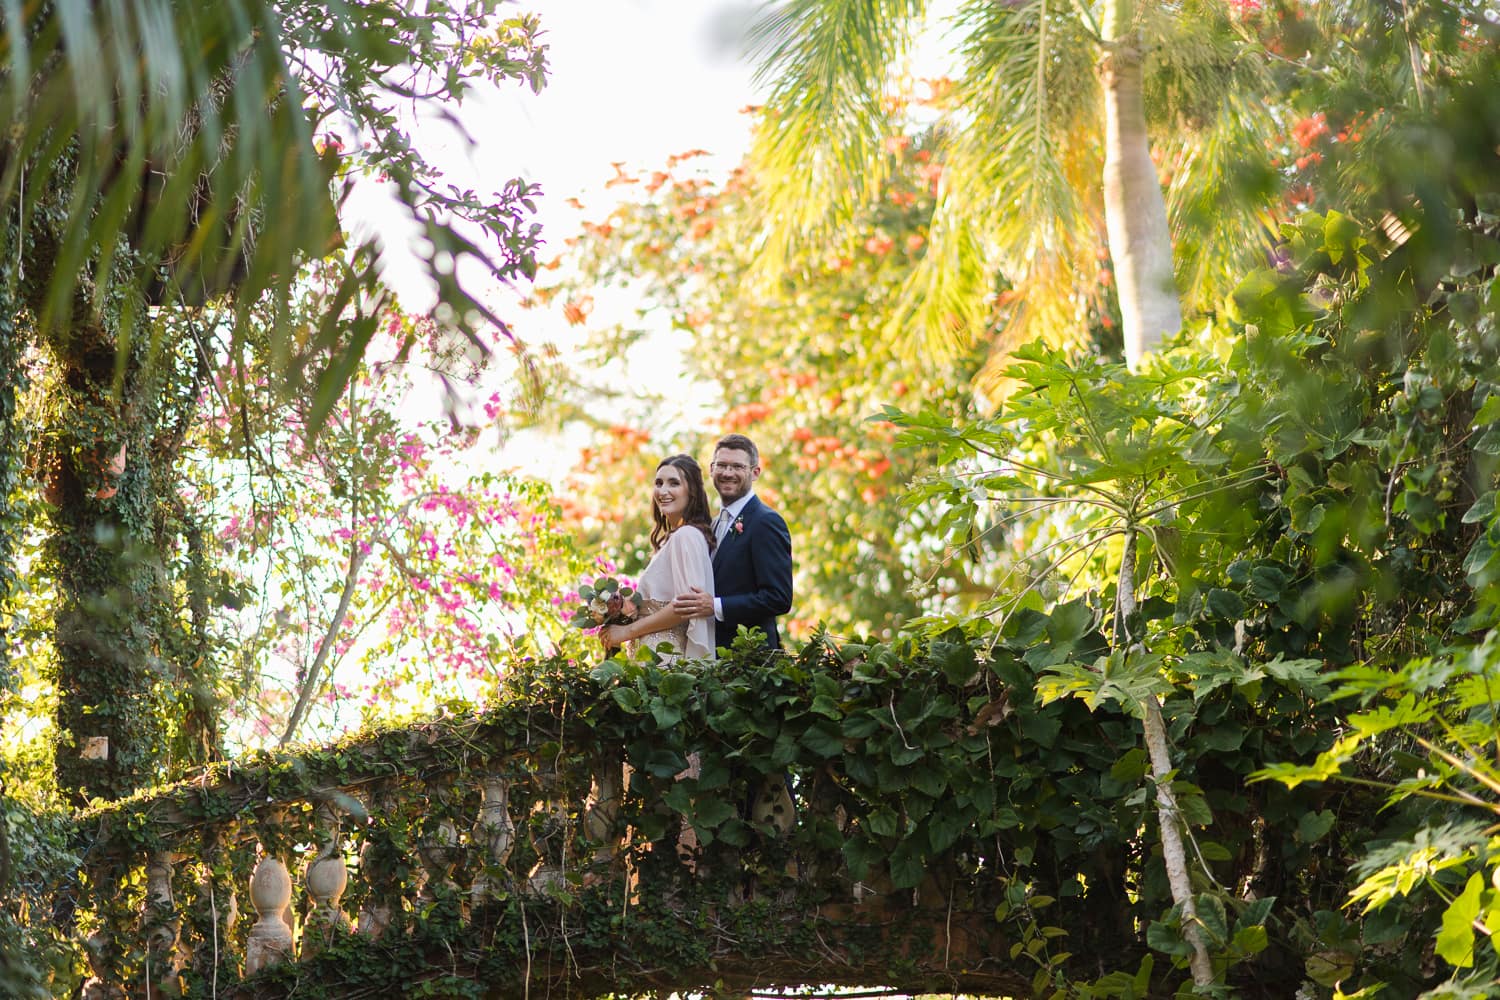 hacienda-siesta-alegre-photos-intimate-relaxed-candid-micro-wedding-photography-puerto-rico-046.jpg